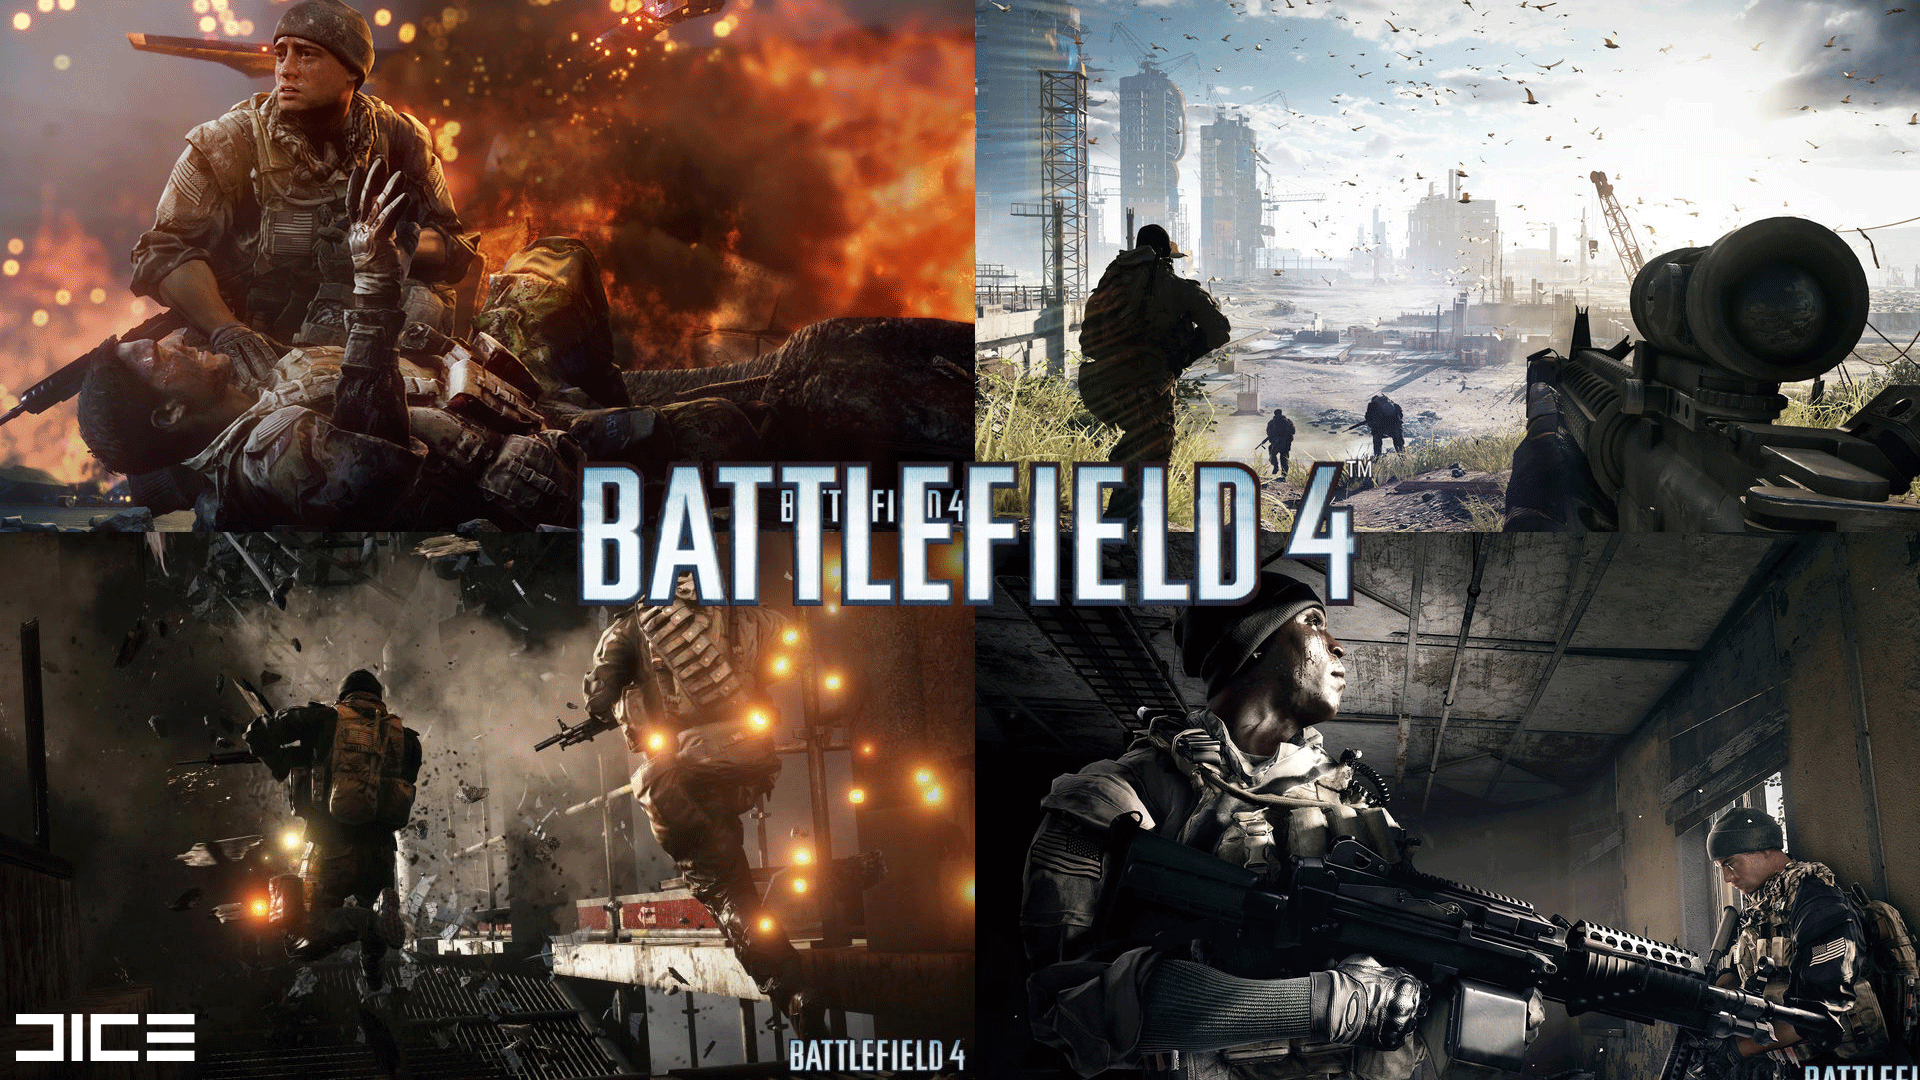 46+] Battlefield 4 1080p Wallpaper - WallpaperSafari